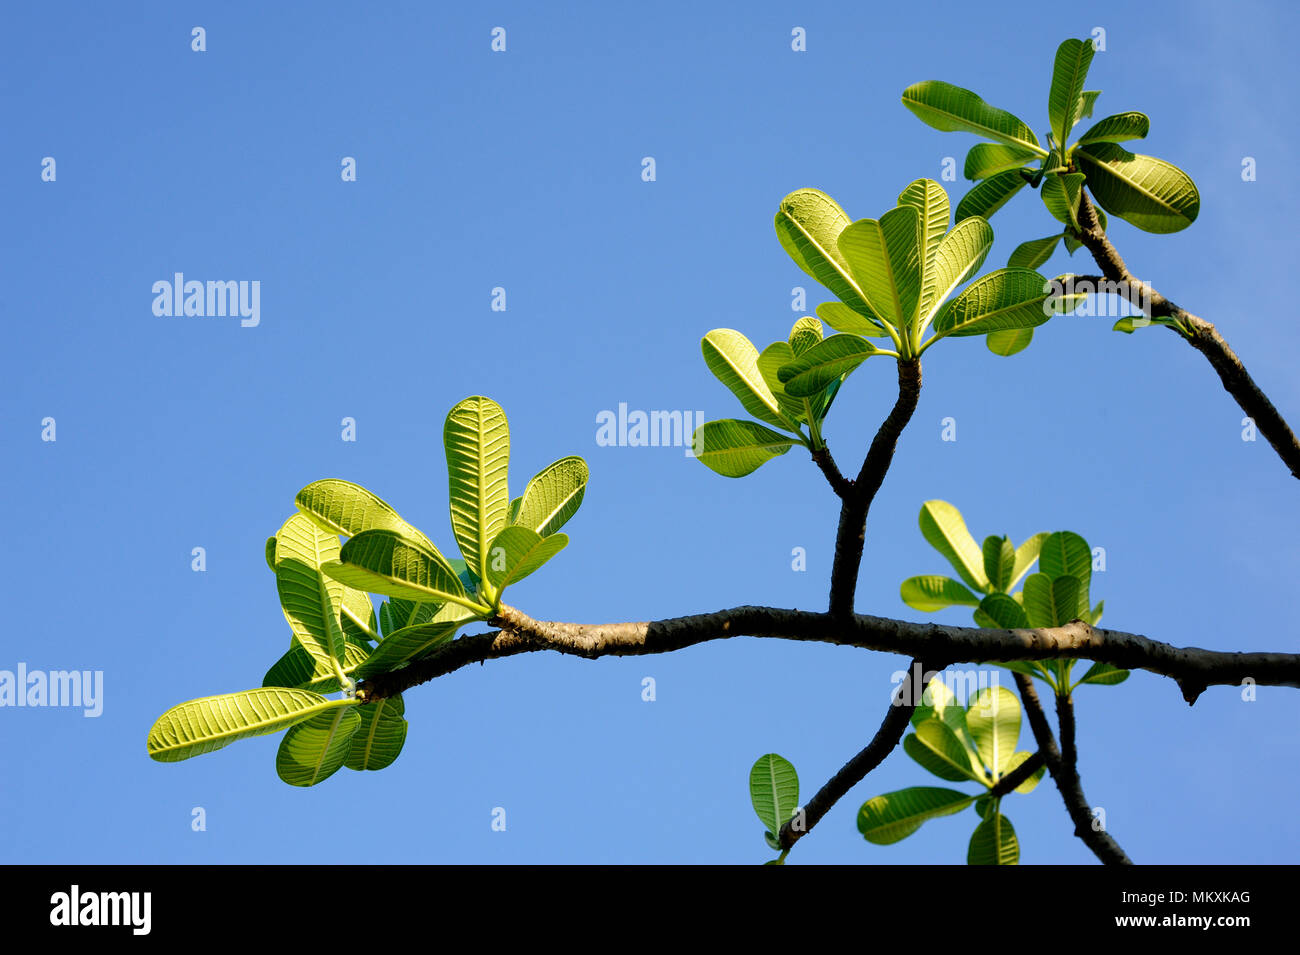 Plumeria hojas verdes sobre cielo azul Foto de stock